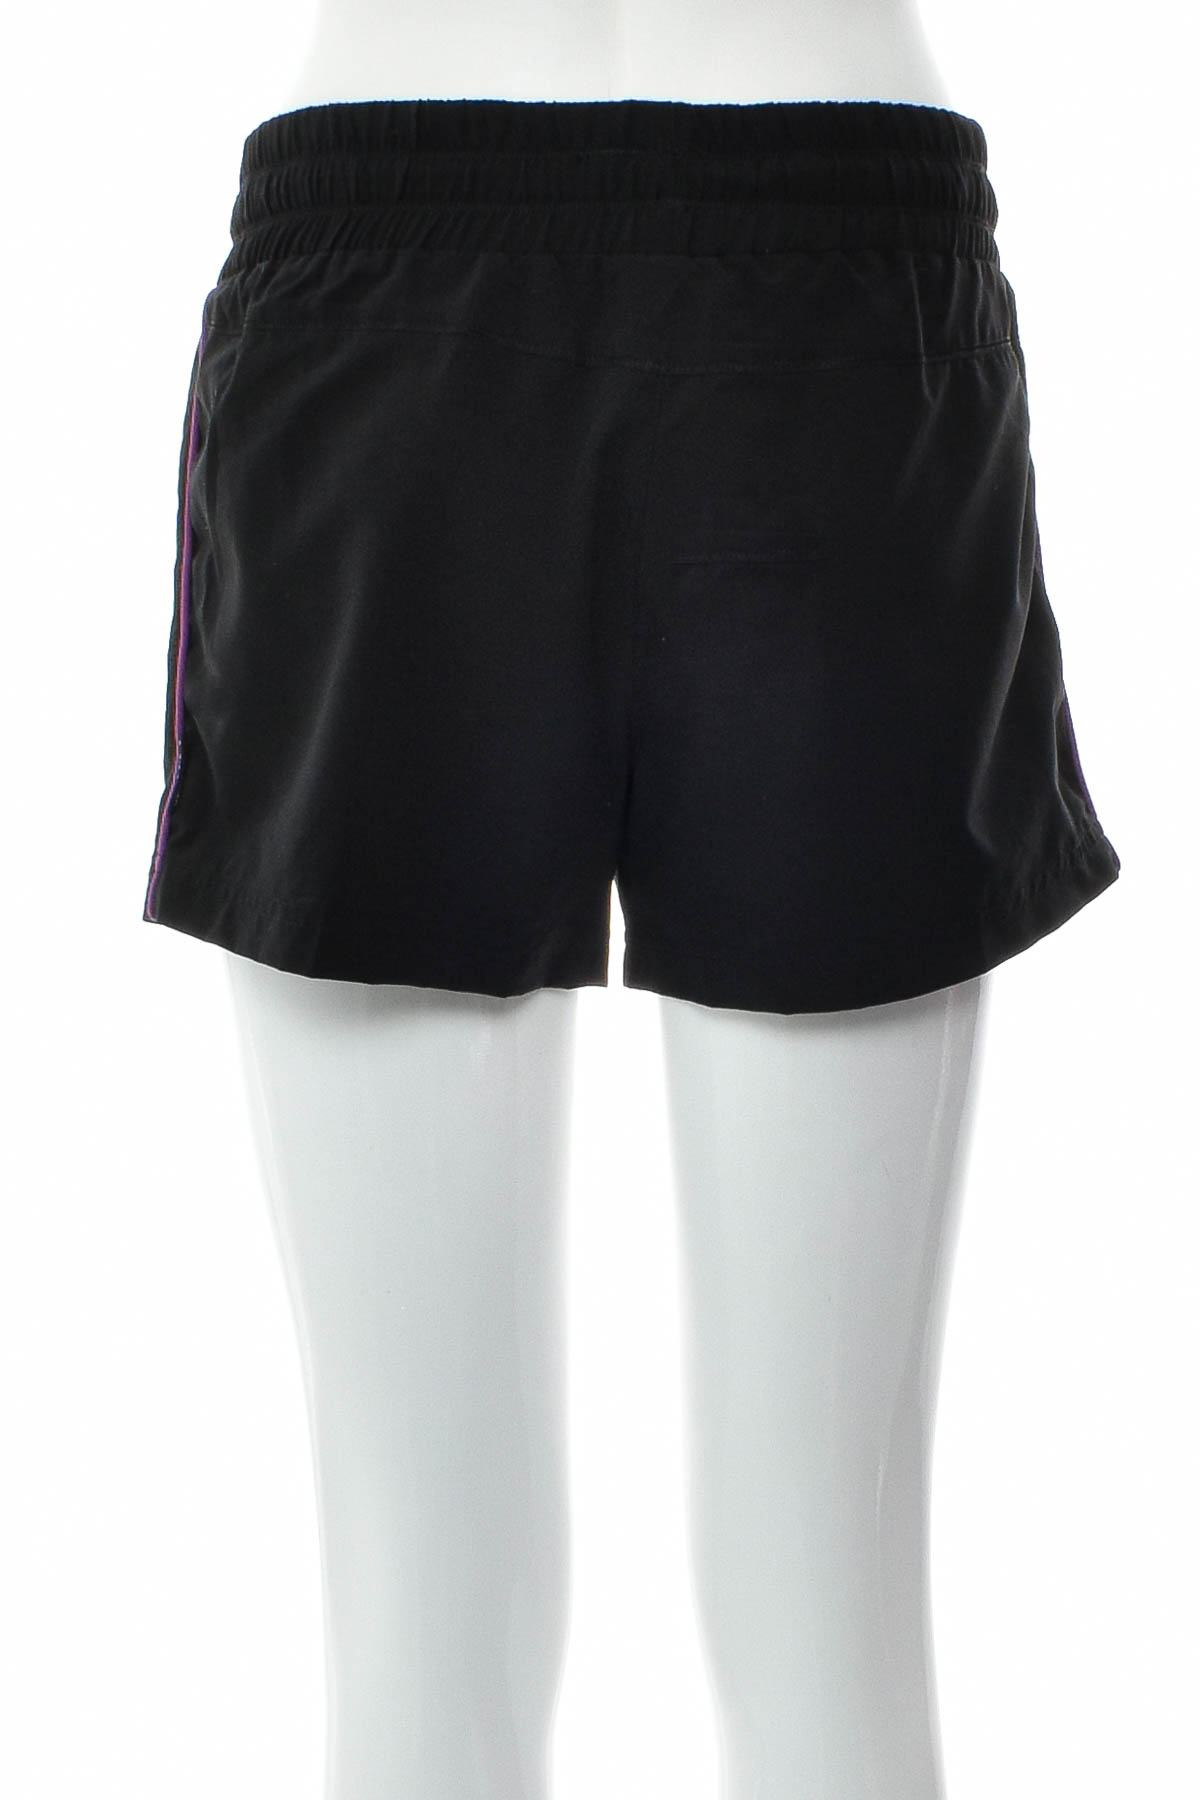 Female shorts - Alex Athletics - 1